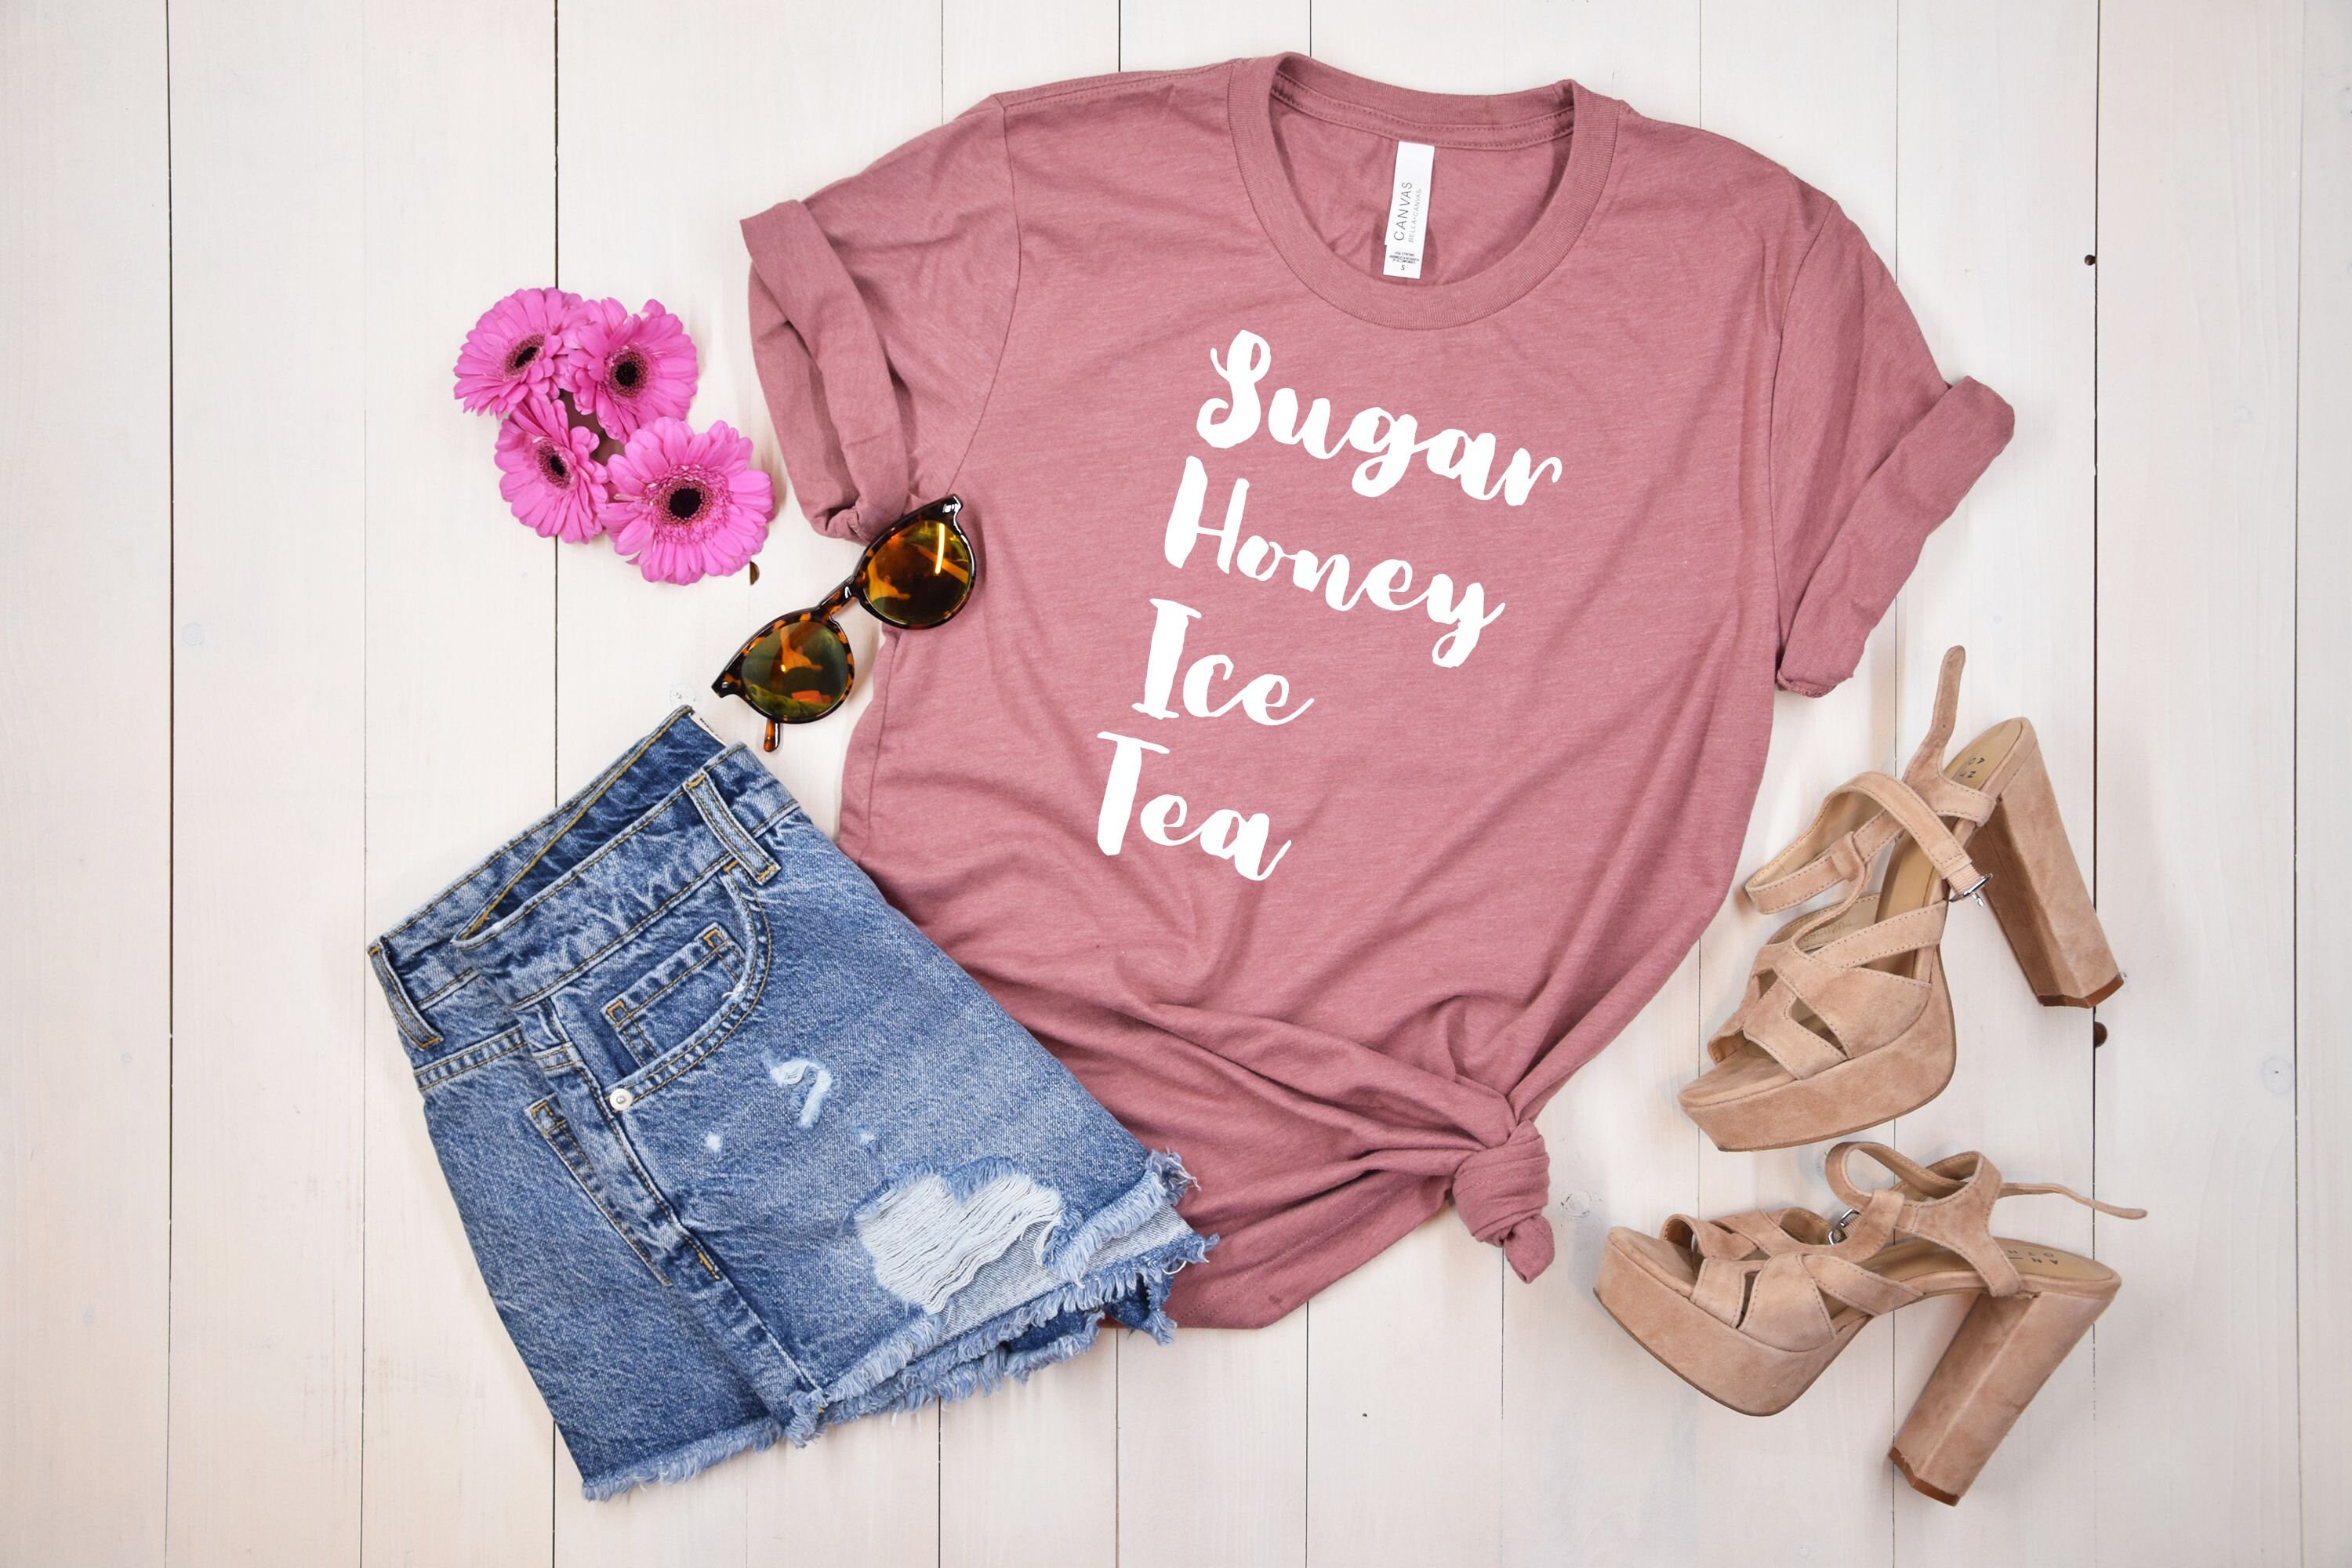 Sugar Honey Ice Tea Shirt, Sweet Southern Saying T-shirt, Cussing Women  Tee, SHIT Shirt, Southern Bell Phrase -  New Zealand